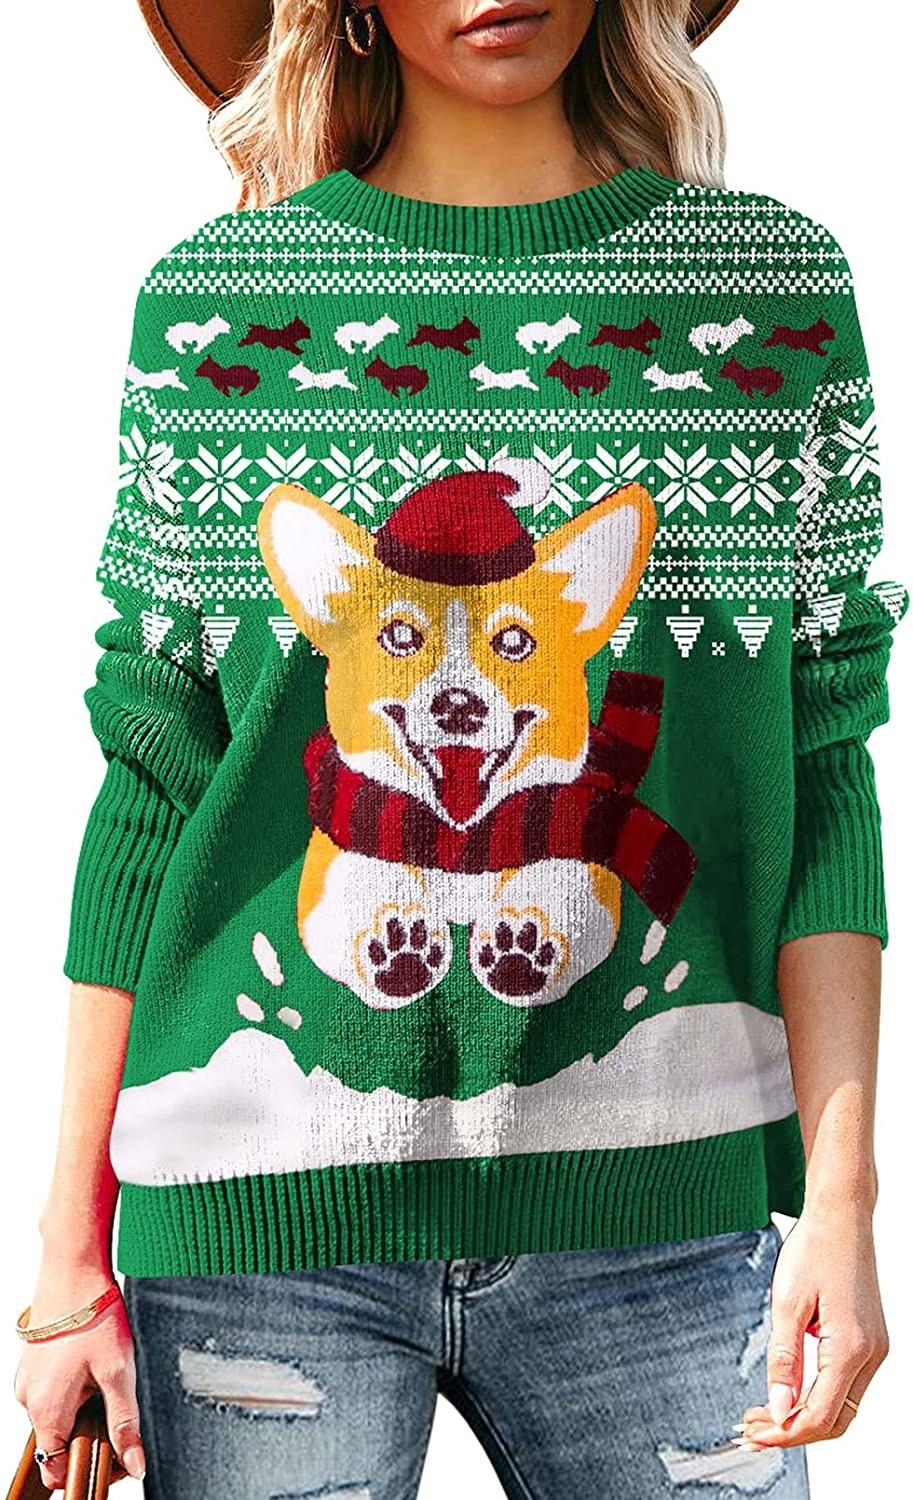 Model wearing corgi-themed Christmas sweater